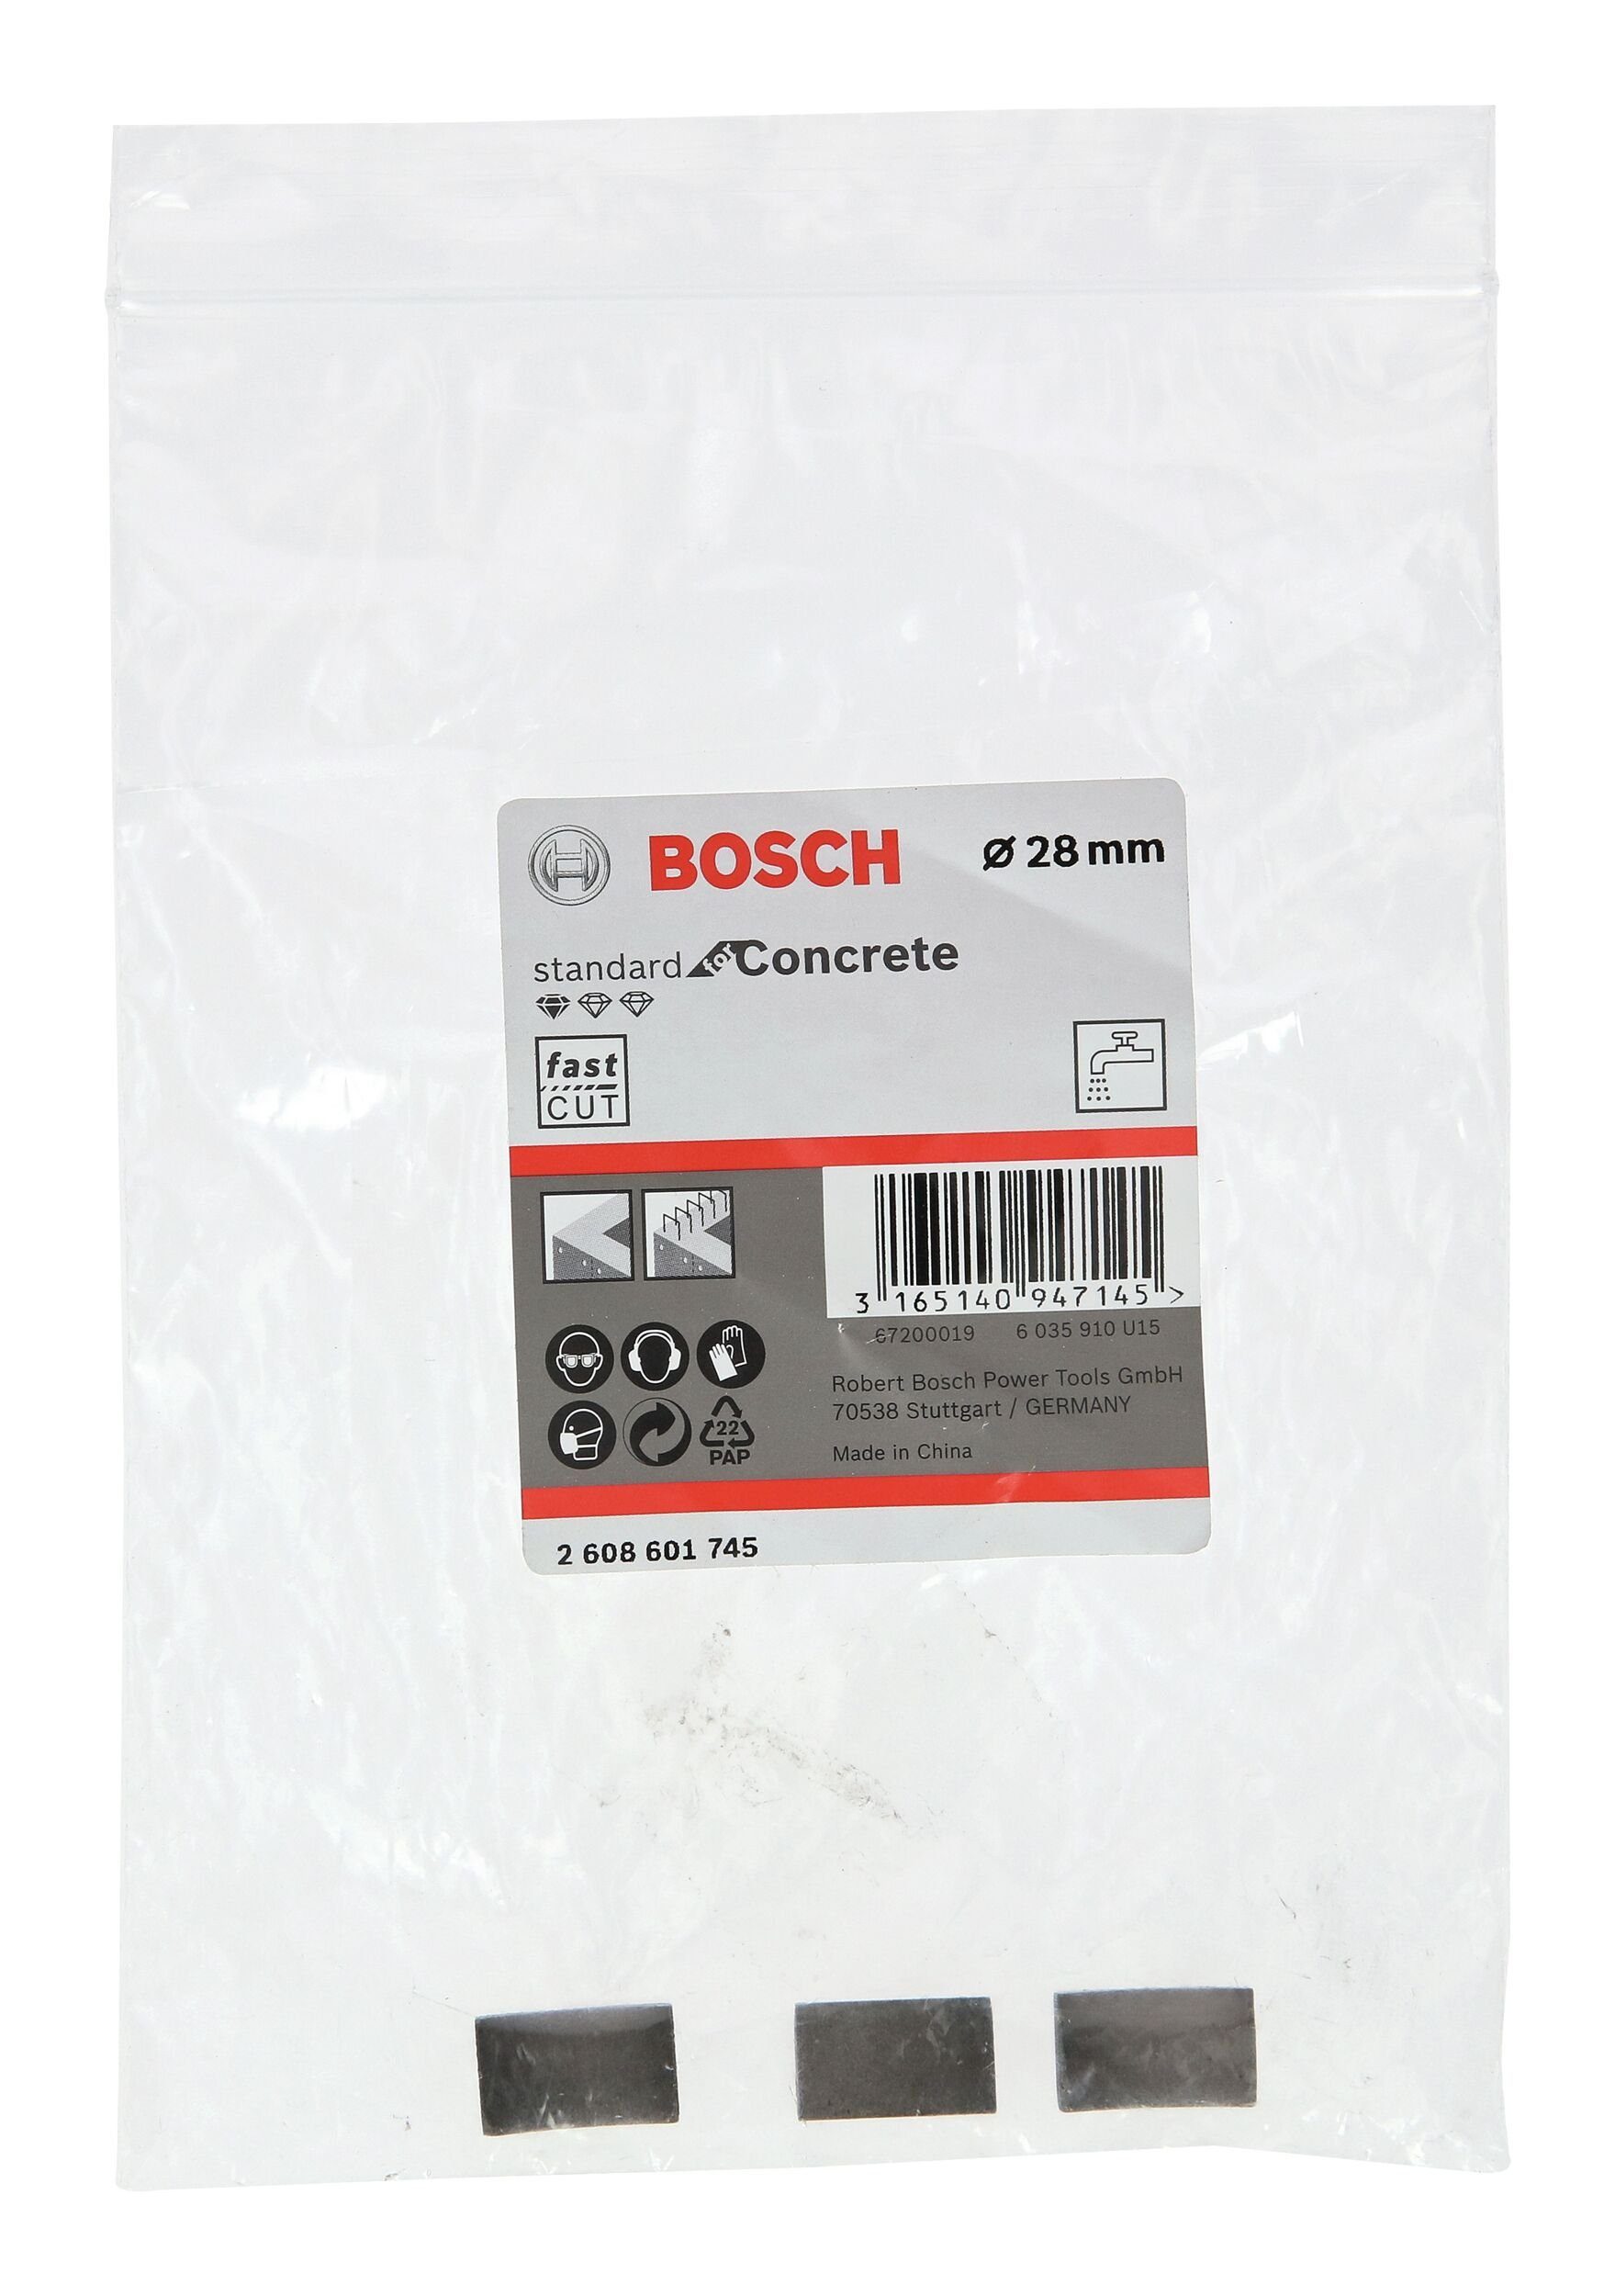 BOSCH Bohrkrone, Standard for Concrete 10 Segmente Diamantbohrkrone - Segmente 3 für mm